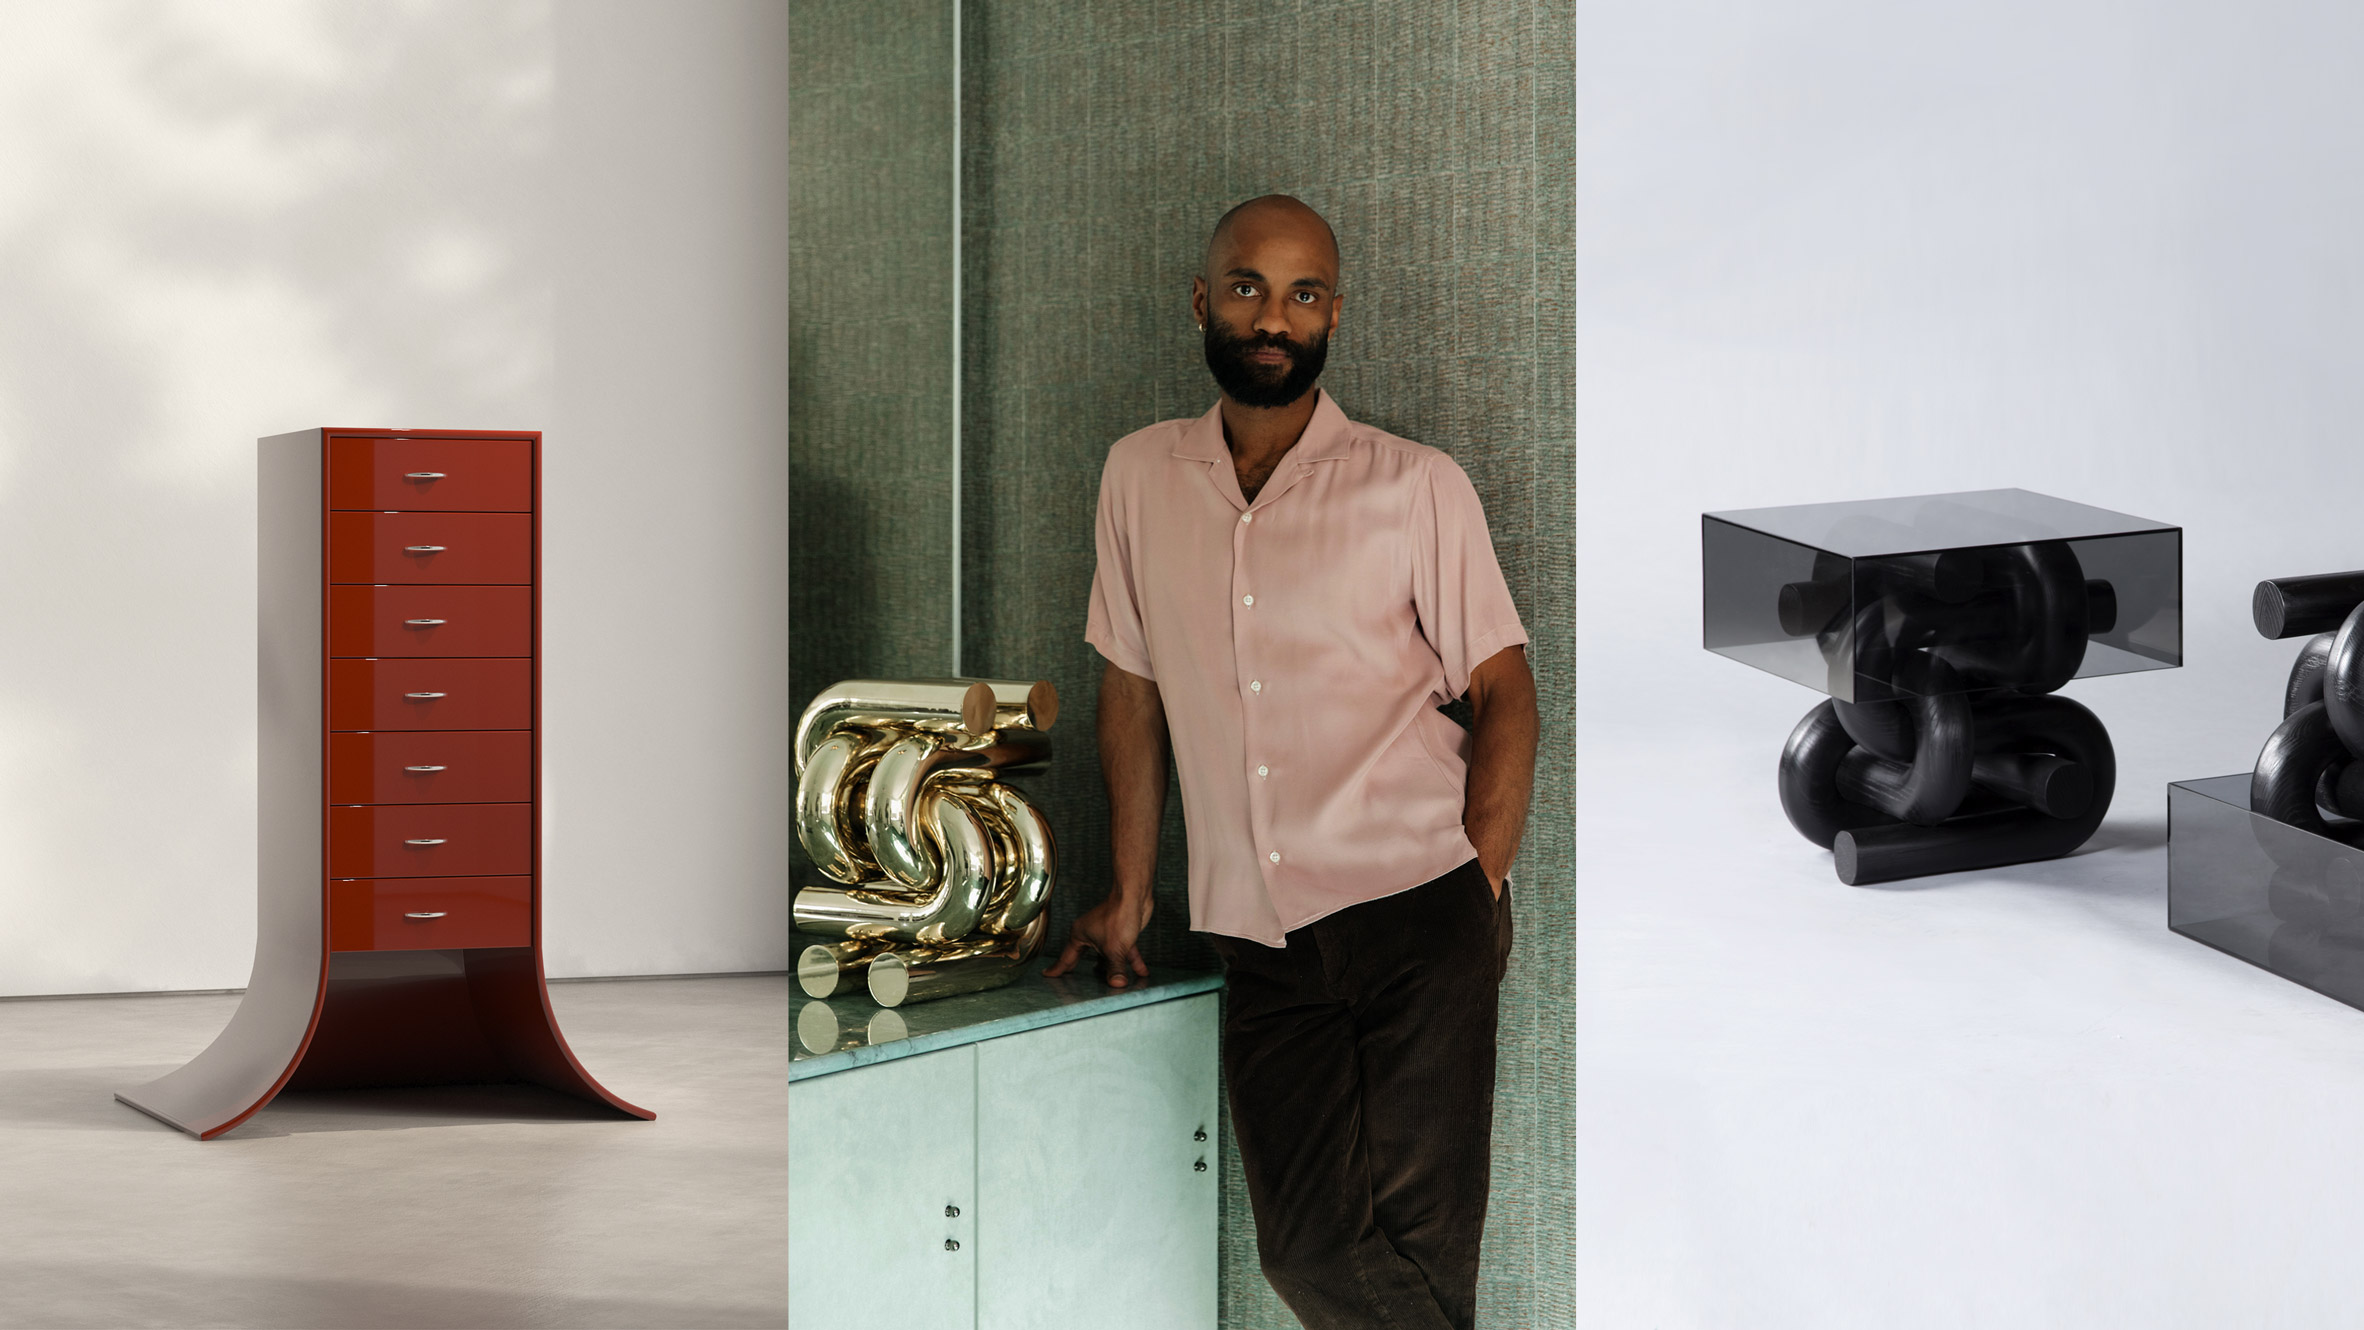 New York furniture designer seeks to amplify a "black perspective" in design